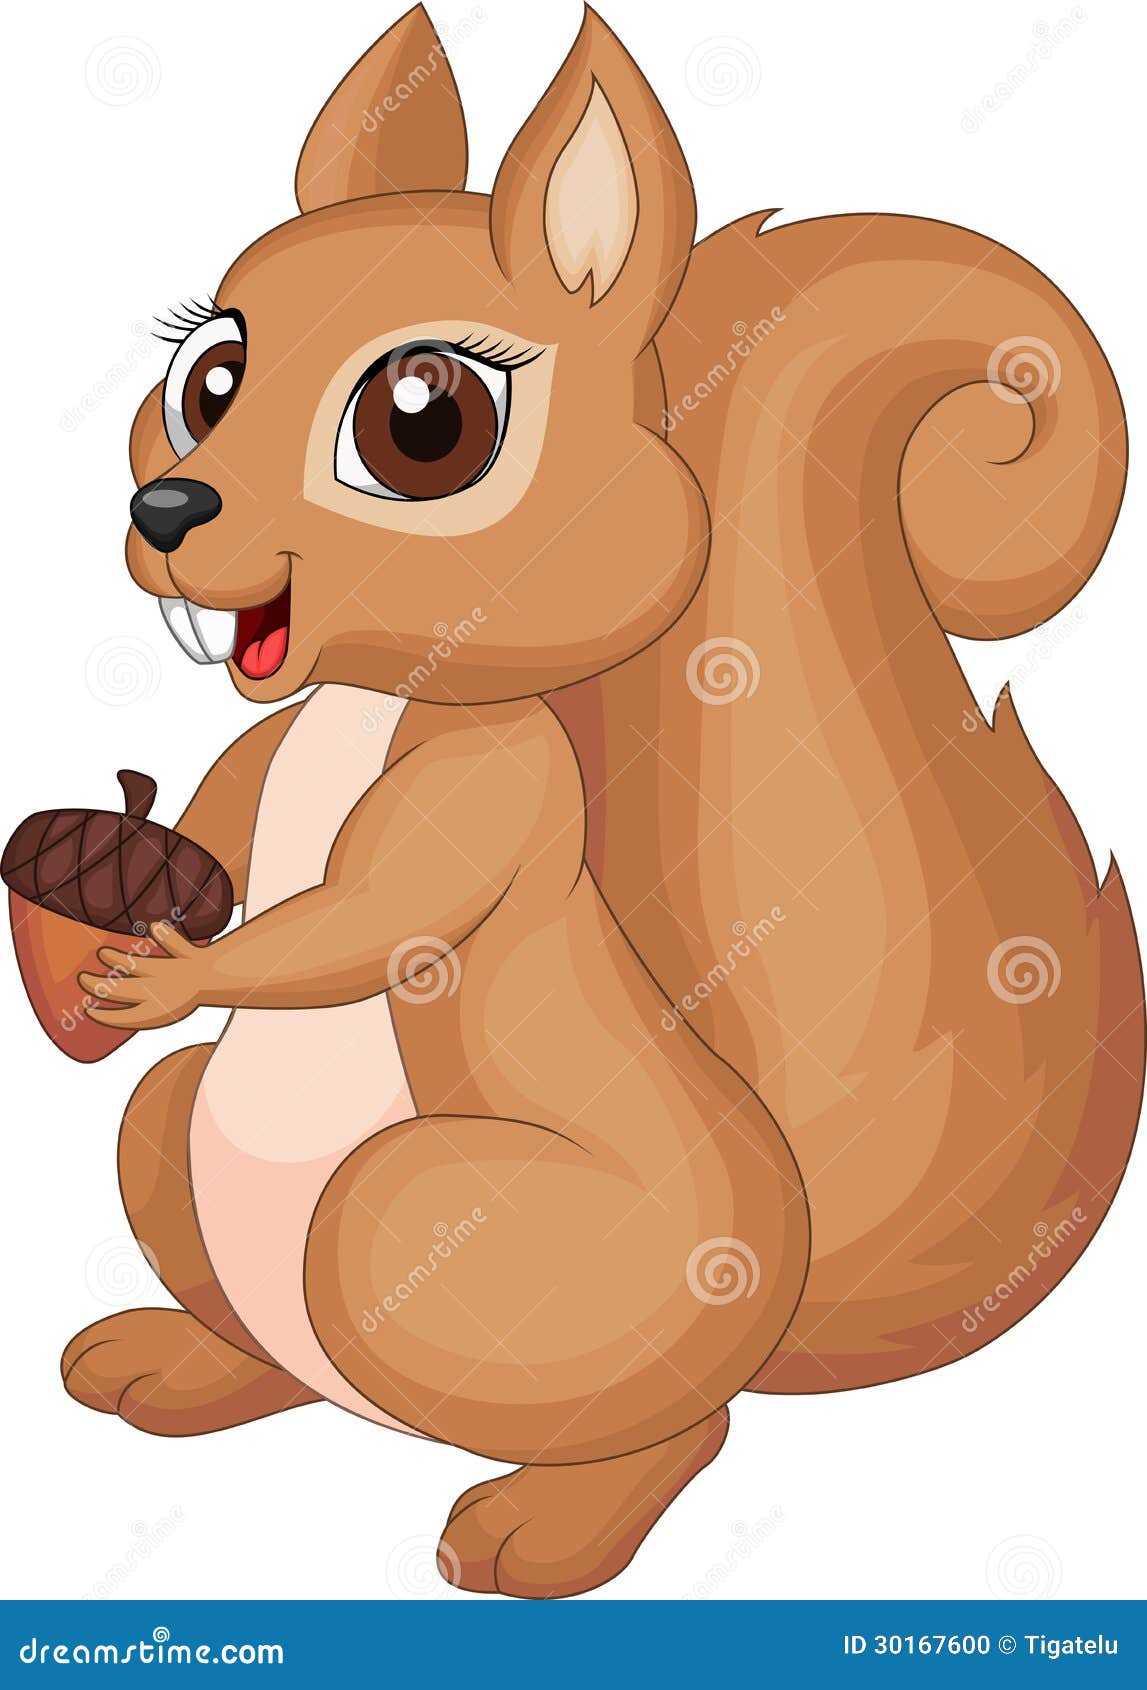 Cute Cartoon Squirrel Holding Acorn Stock Photo - Image: 30167600